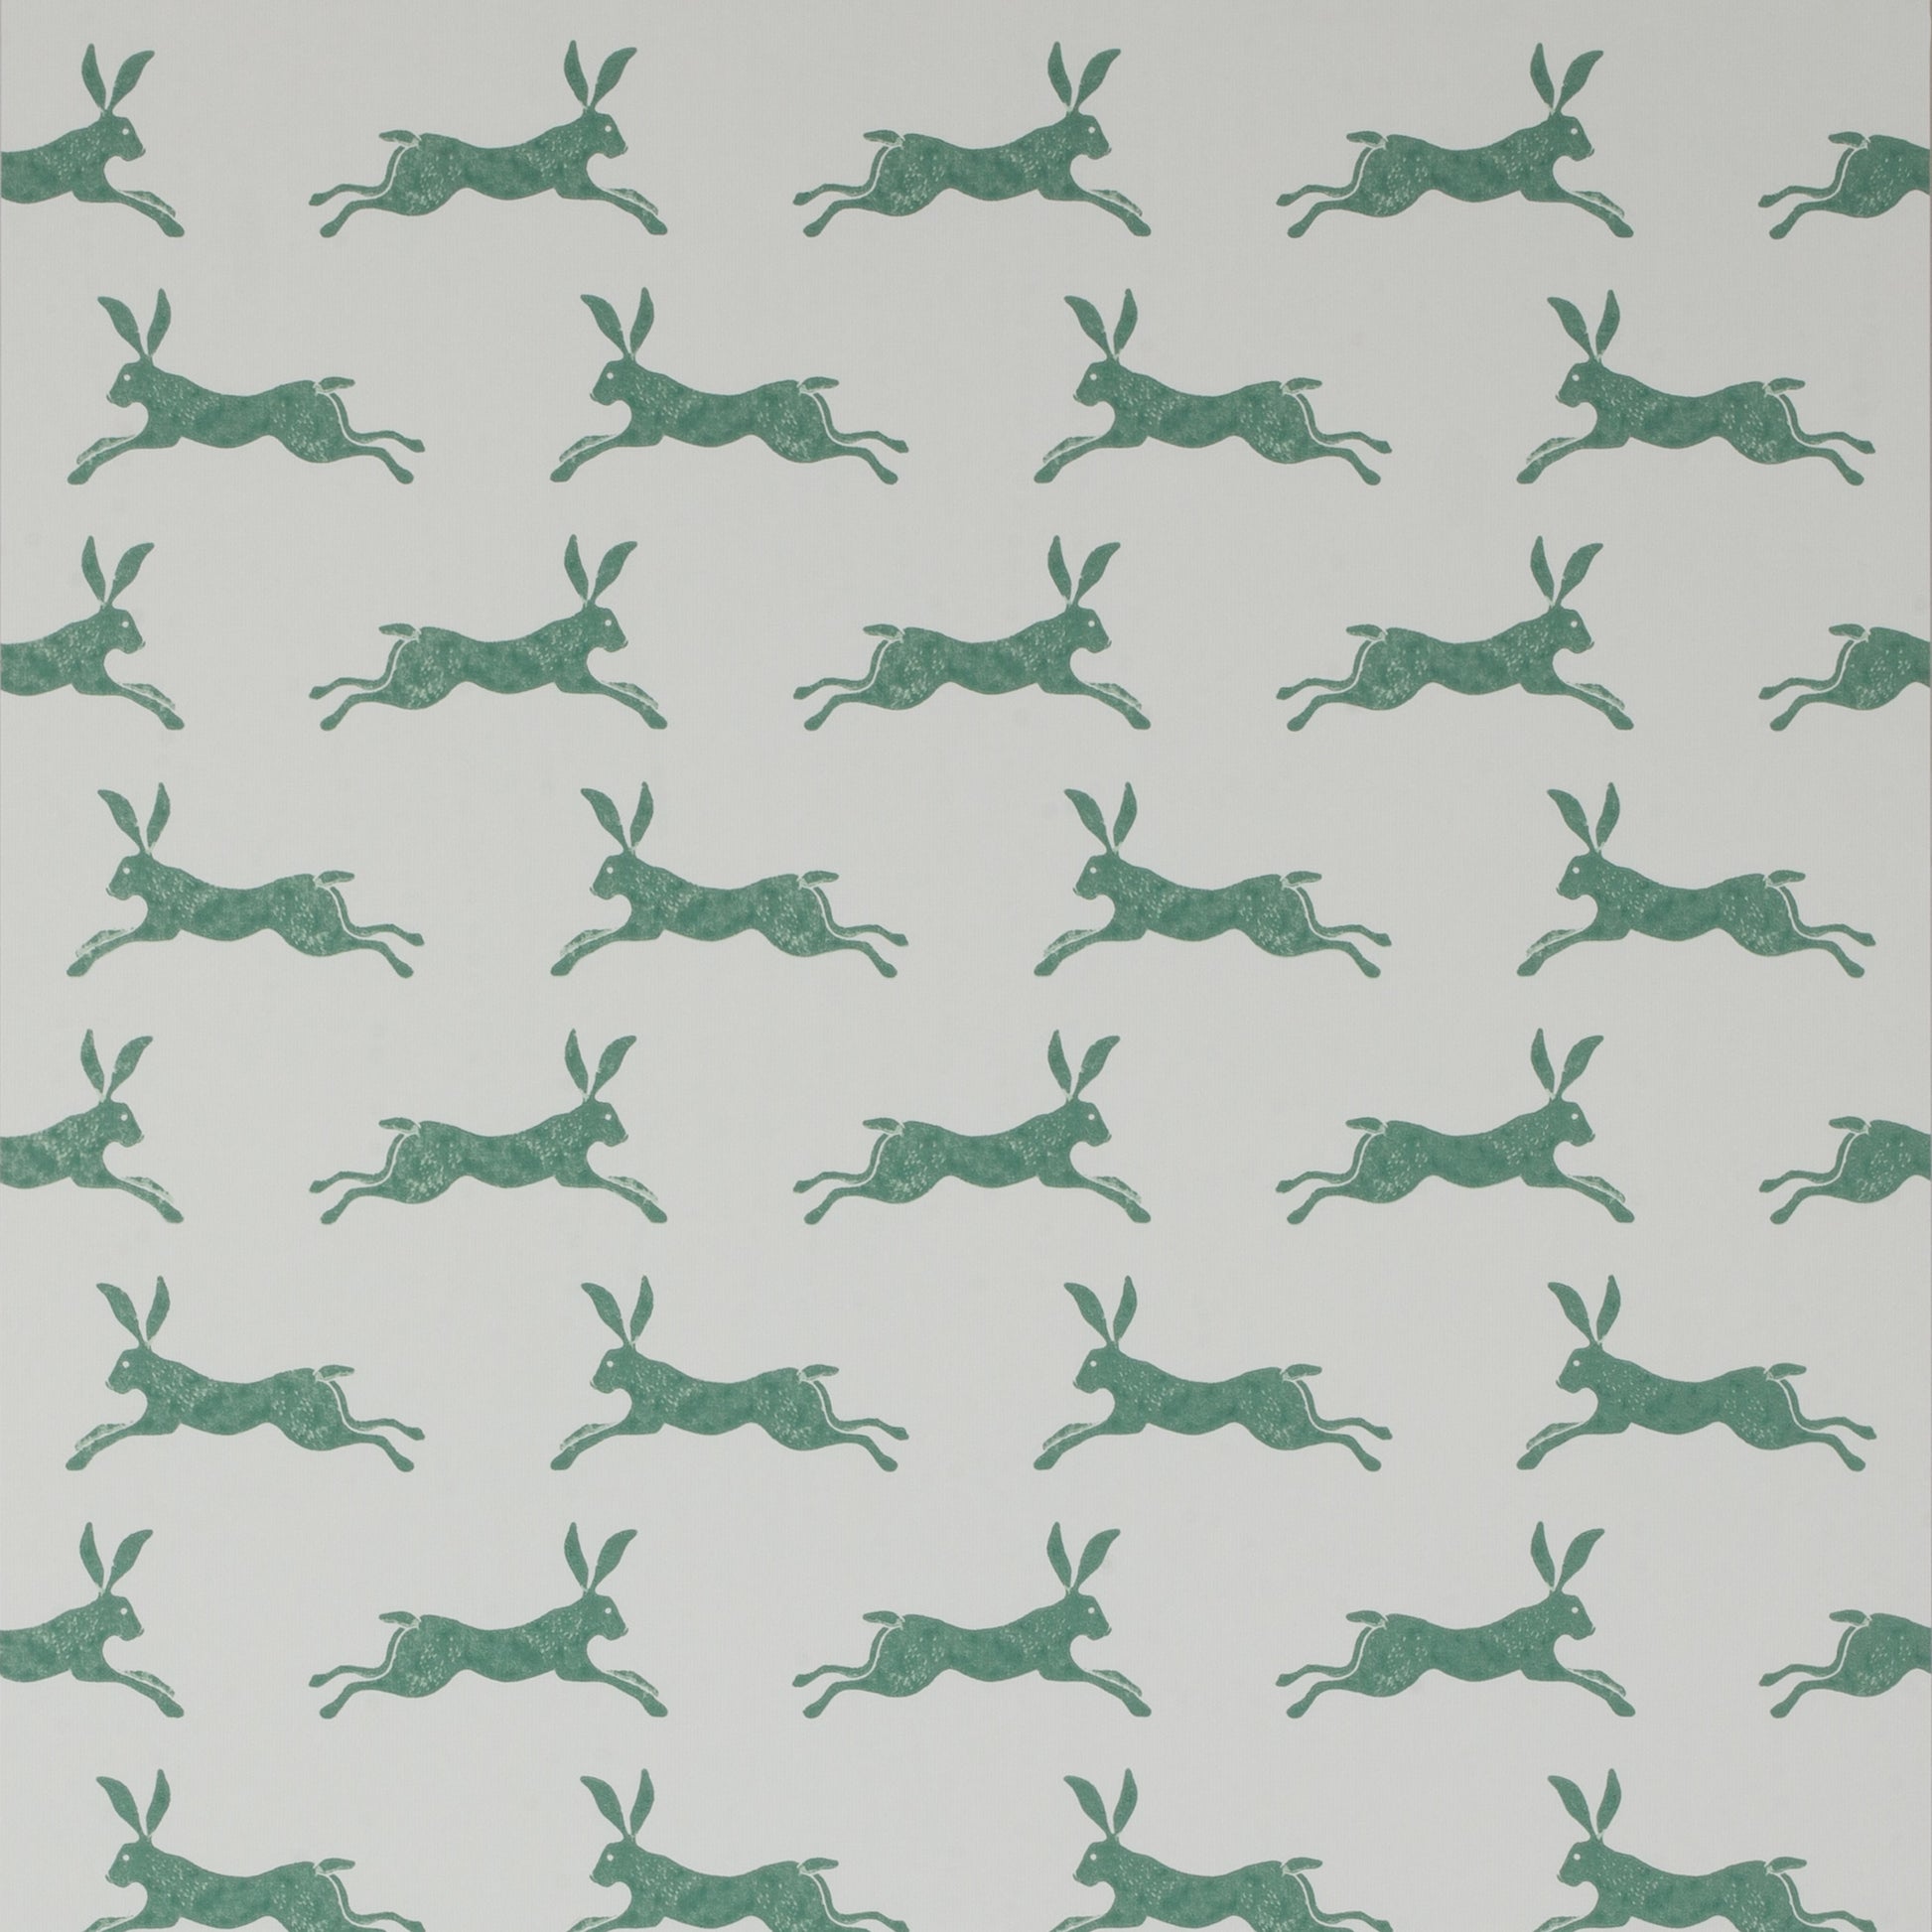 March Hare Nursery Wallpaper - Green